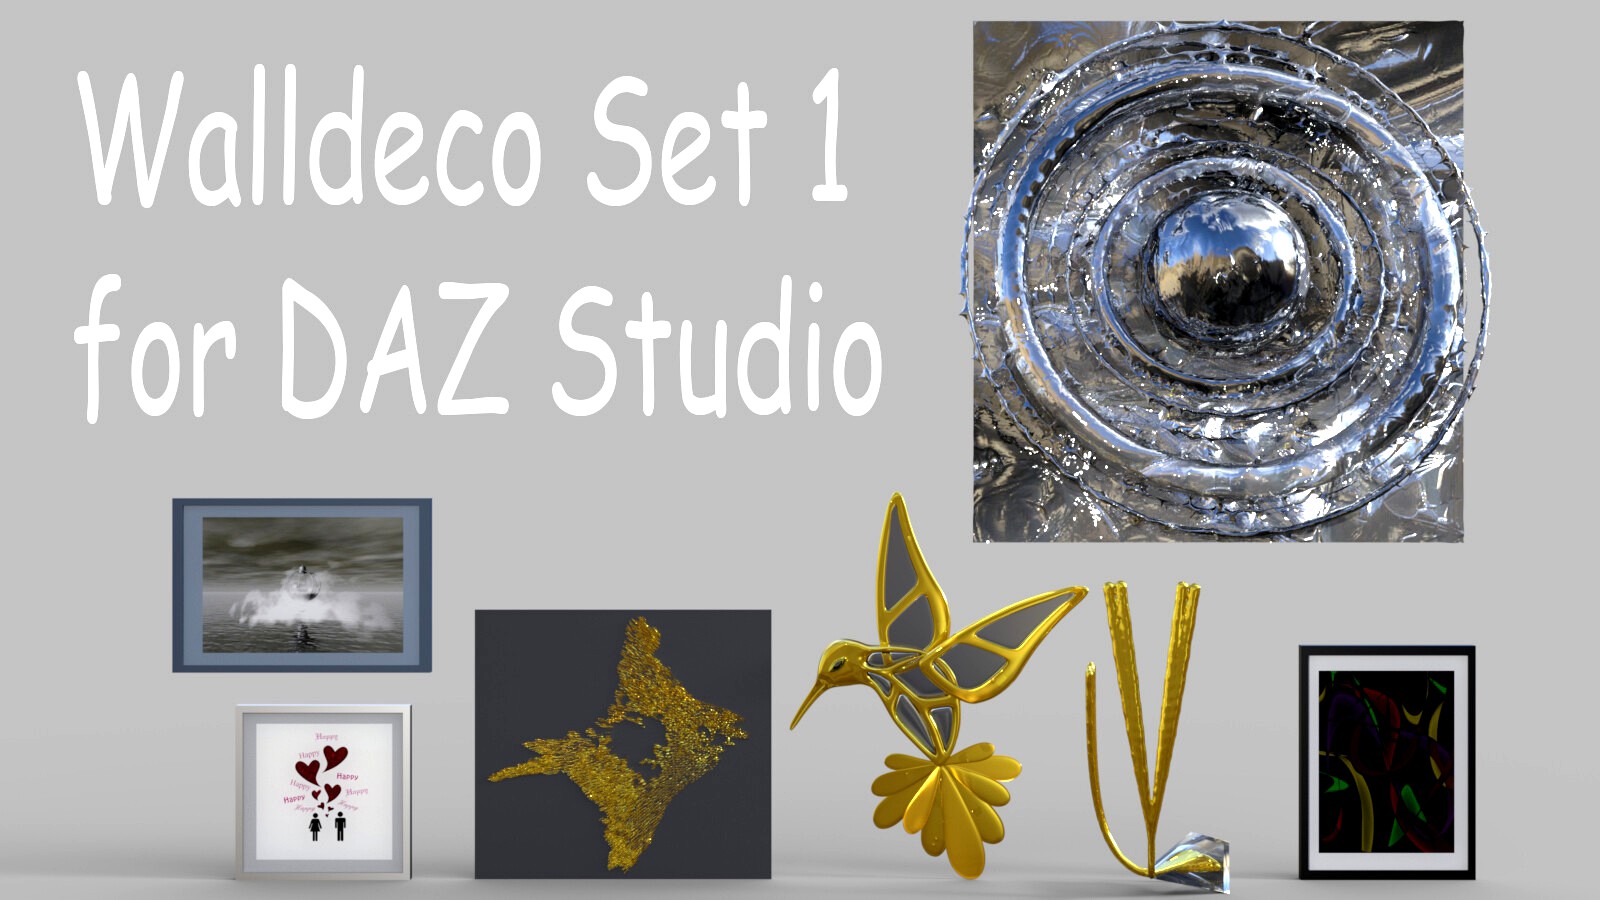 Walldeco Set 1 for DAZ Studio